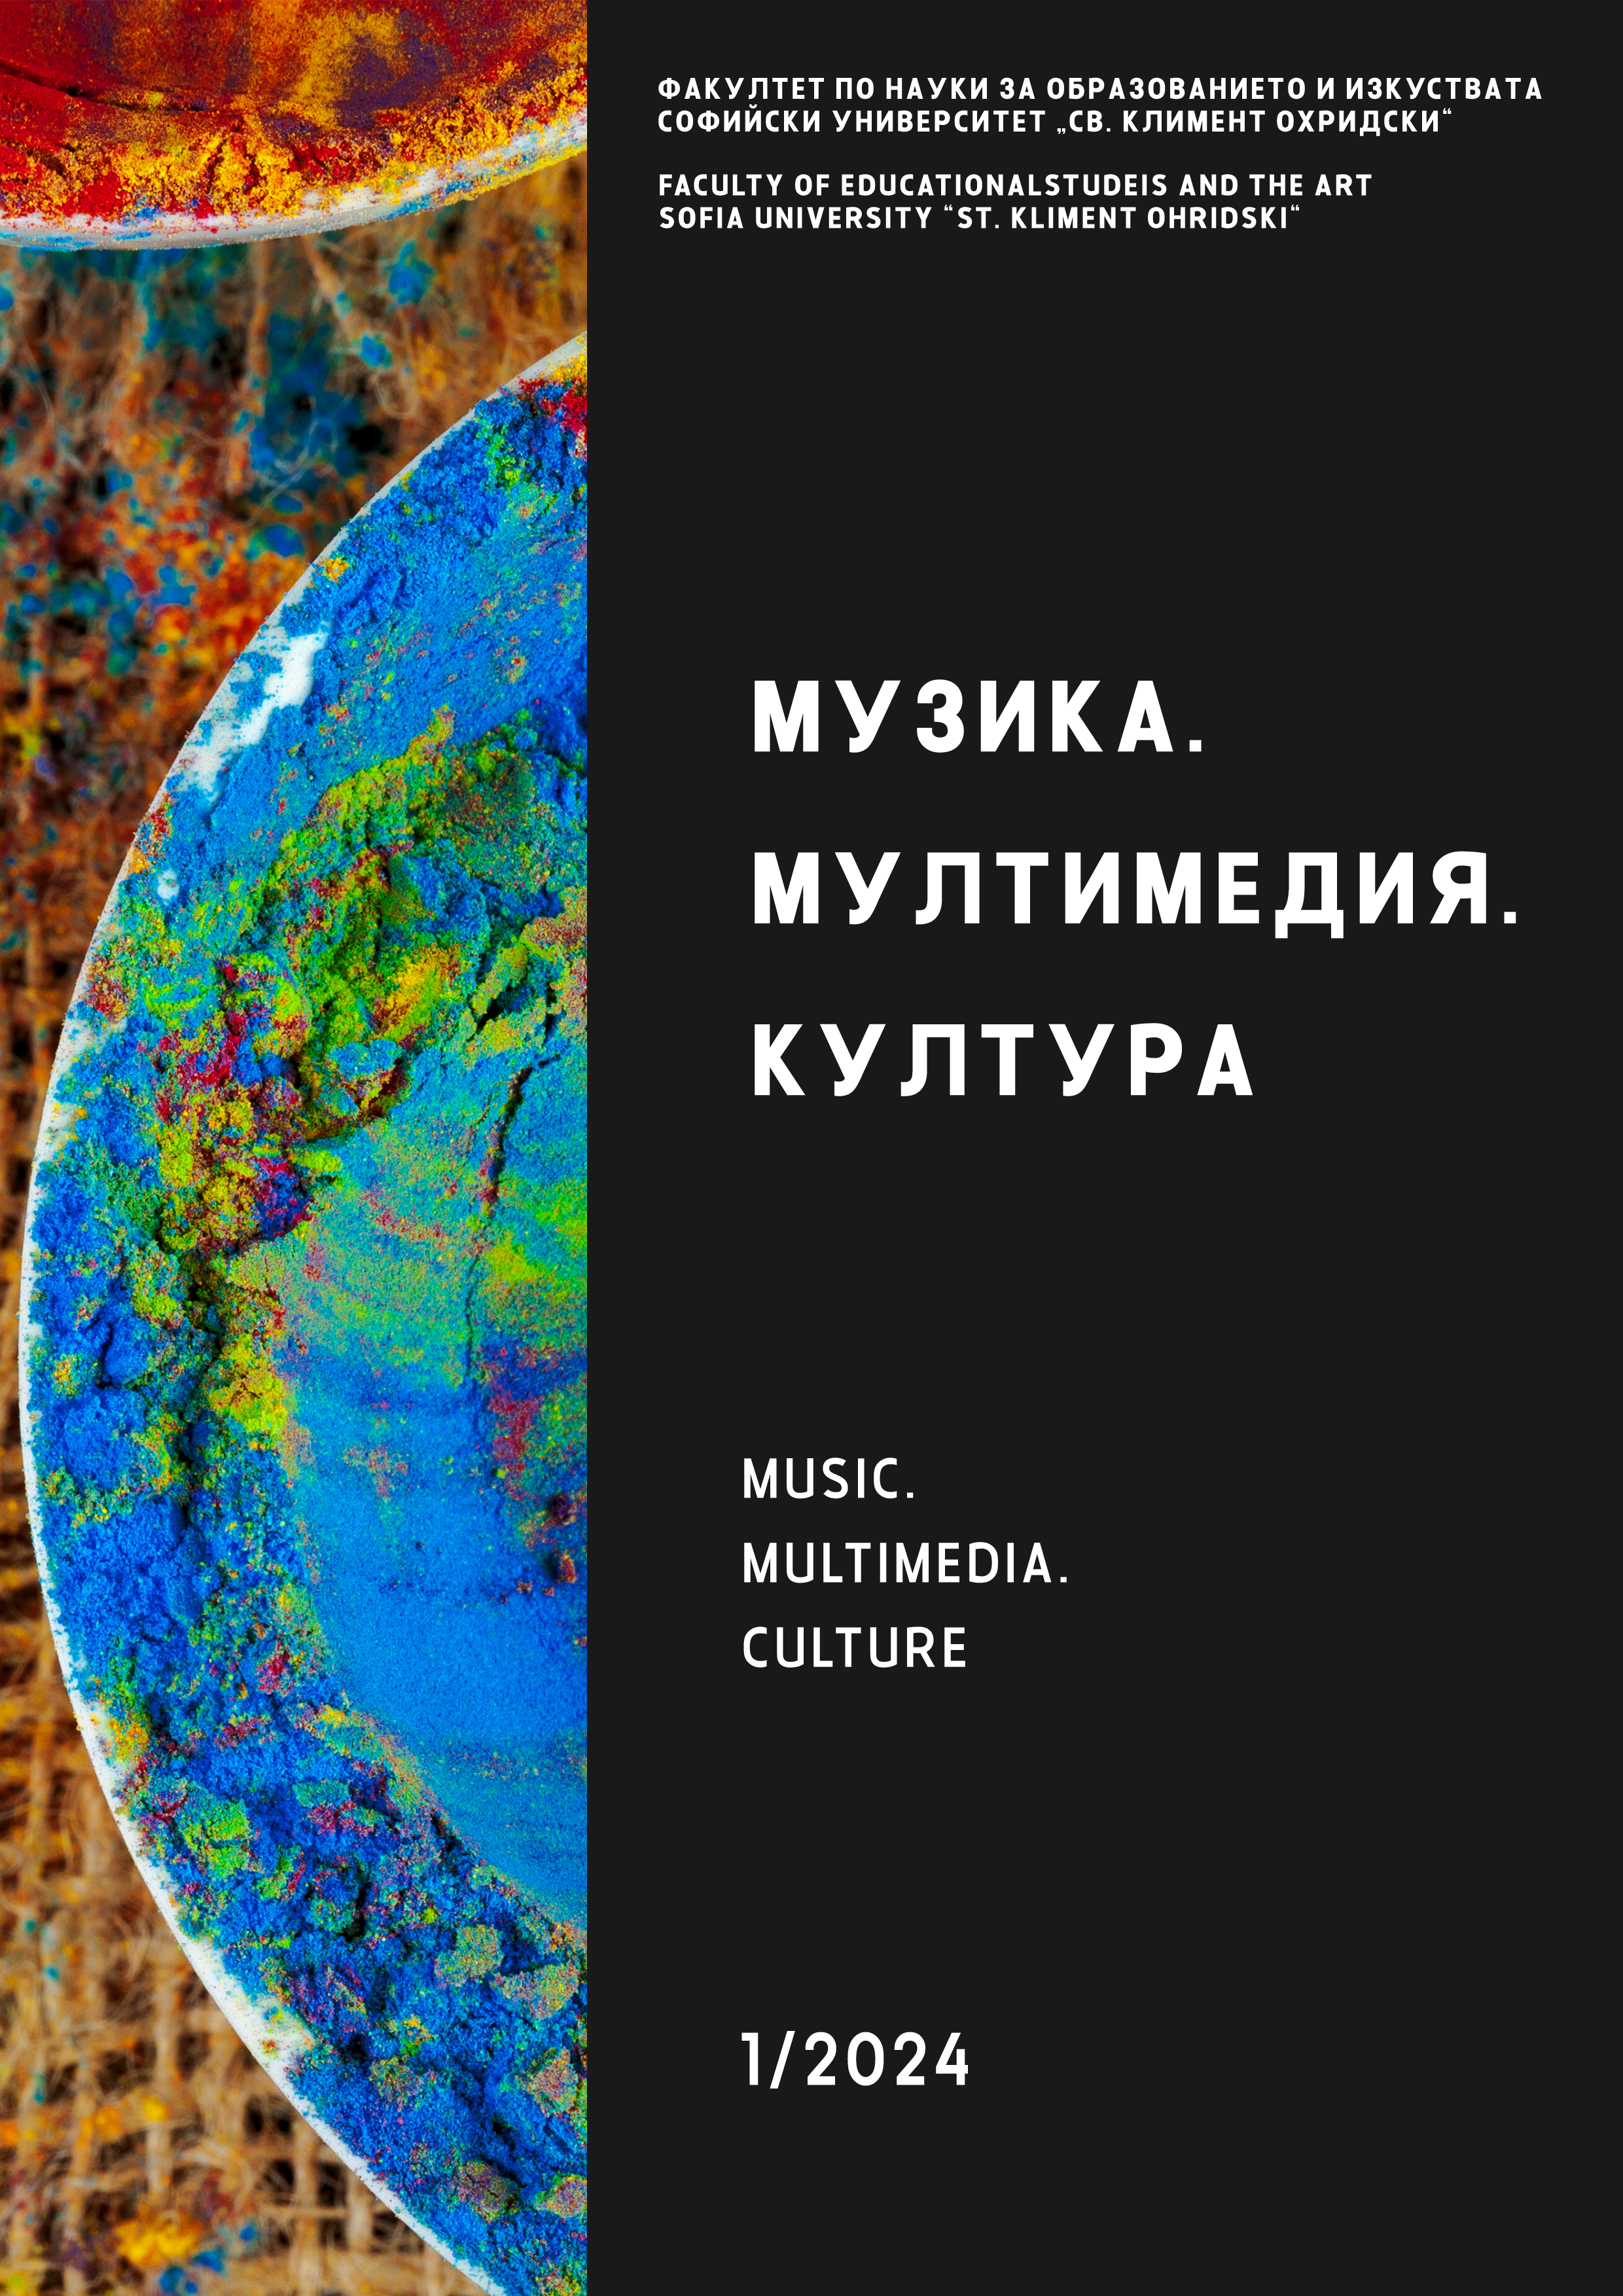 Music. Multimedia. Culture